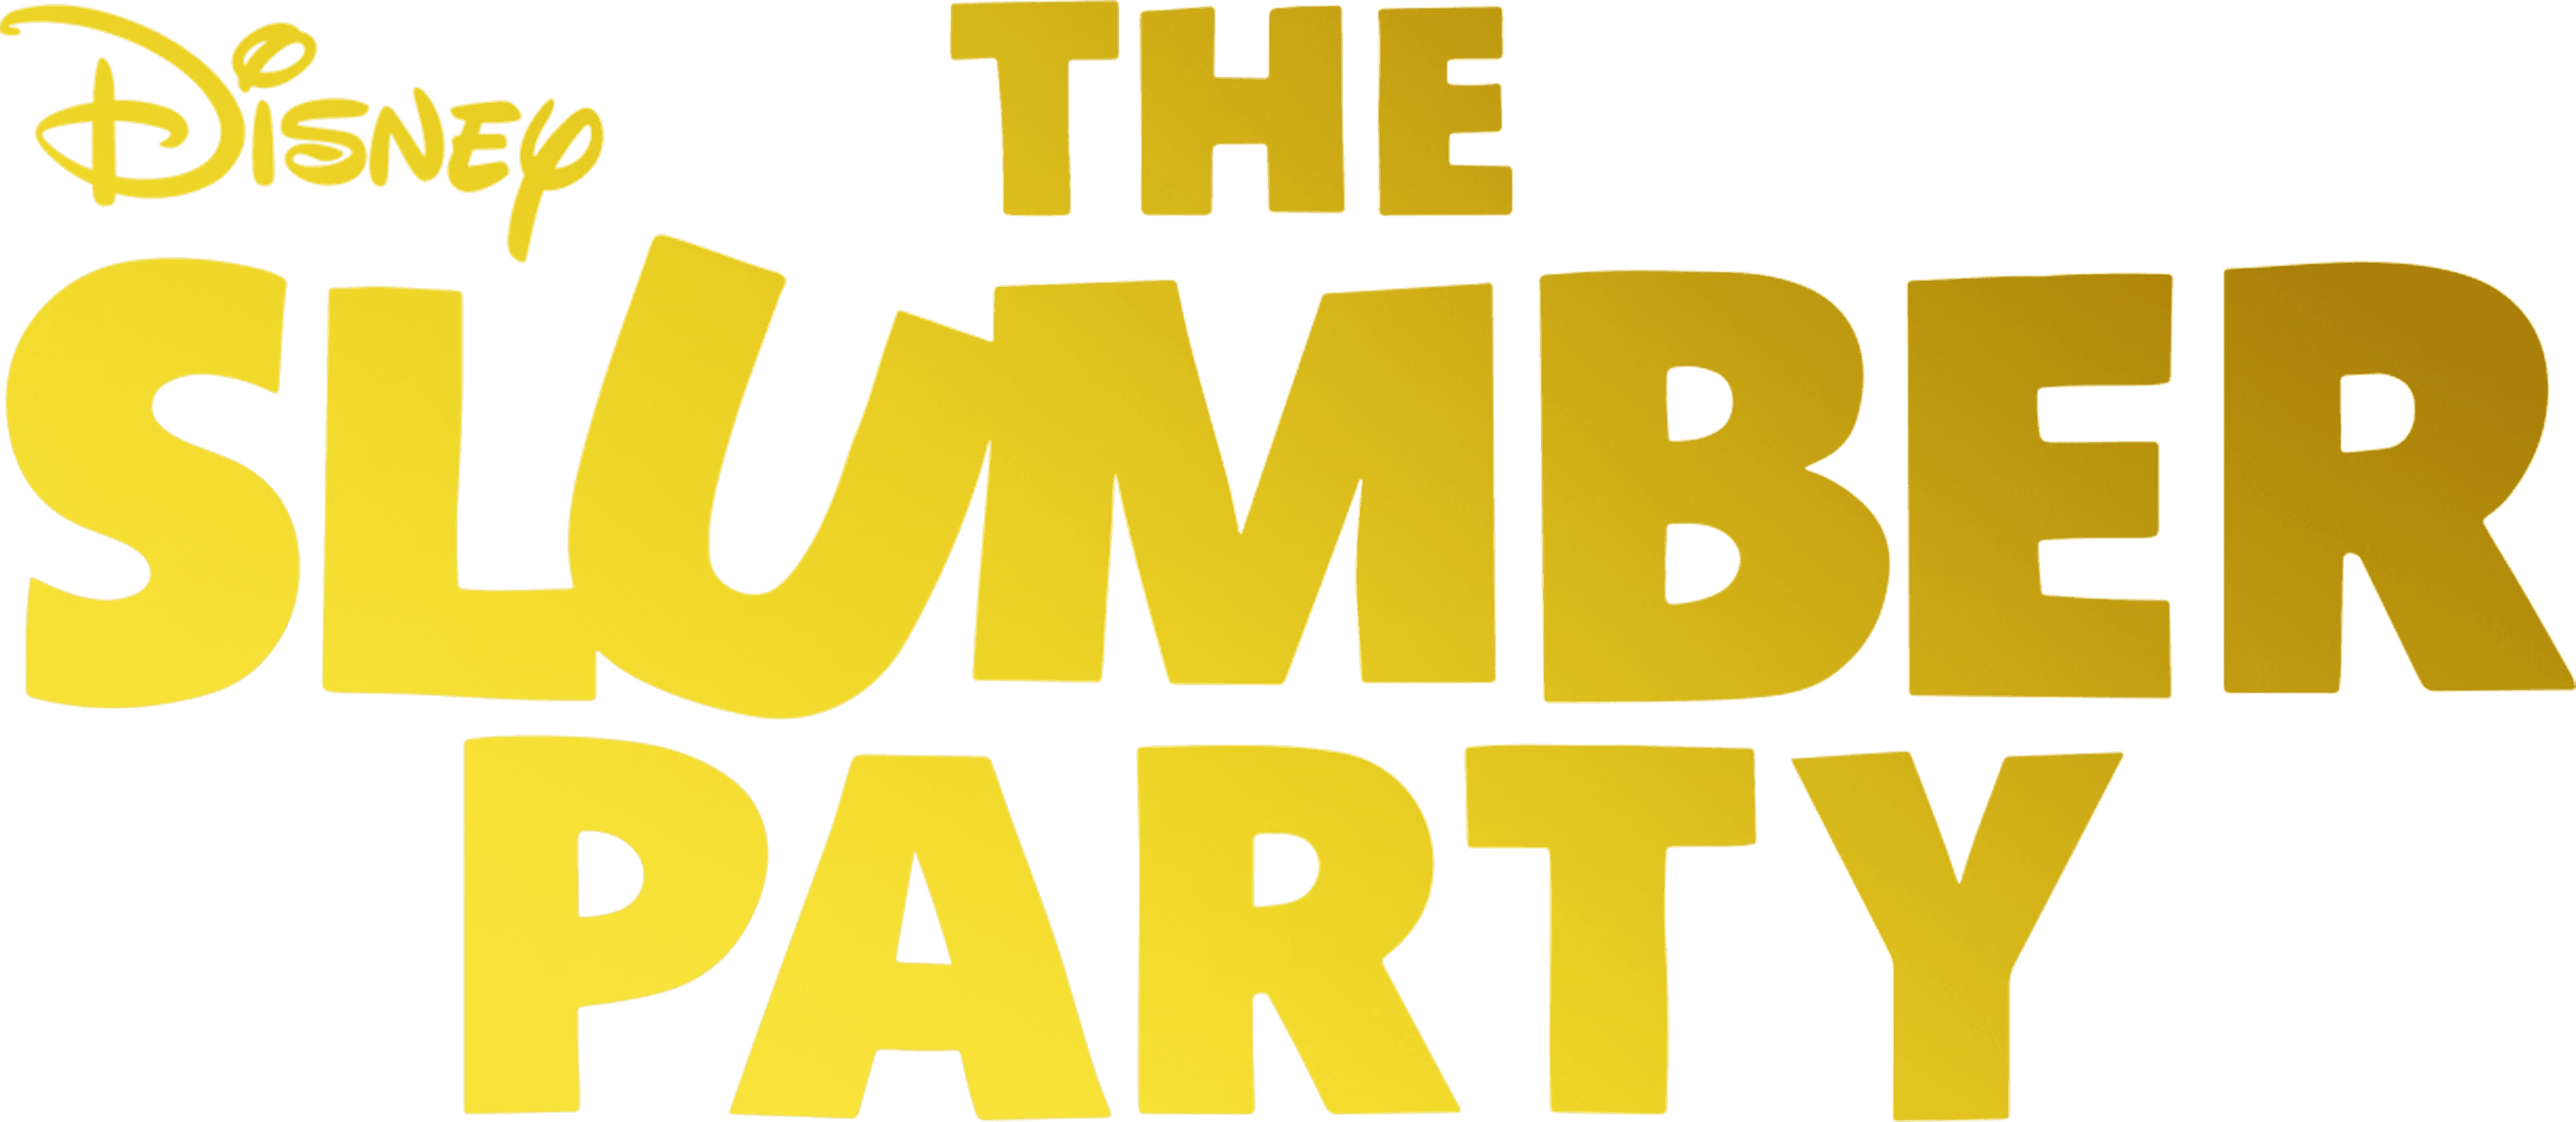 The Slumber Party logo